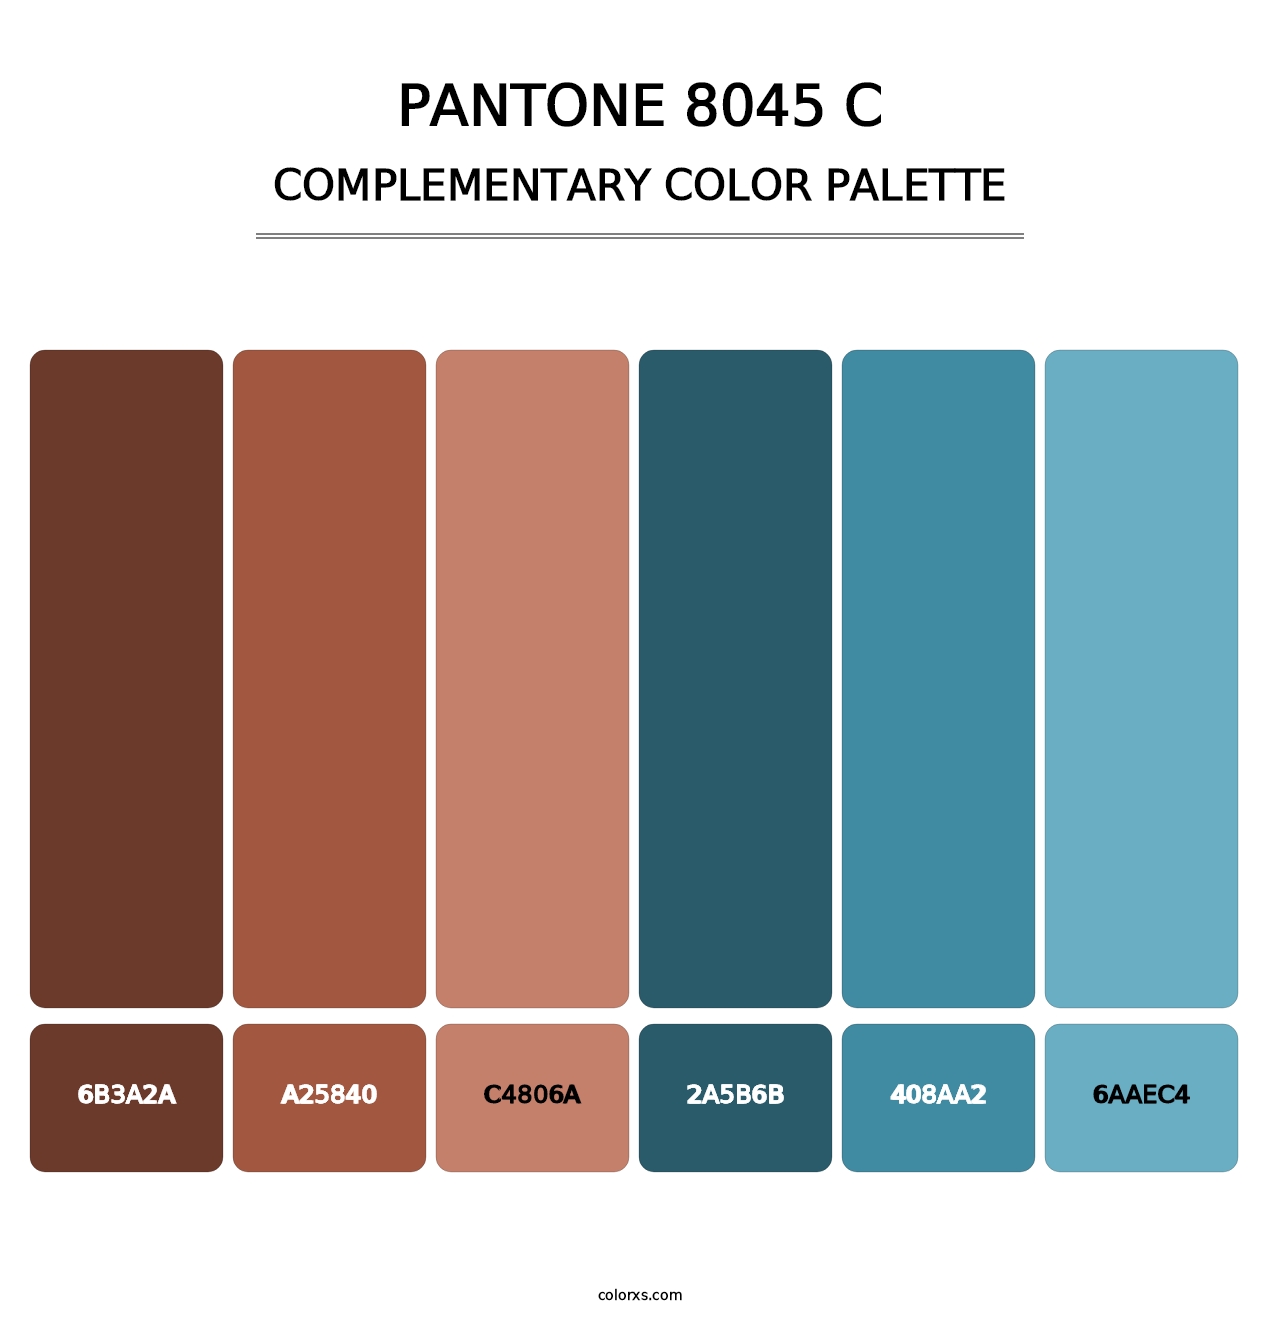 PANTONE 8045 C - Complementary Color Palette